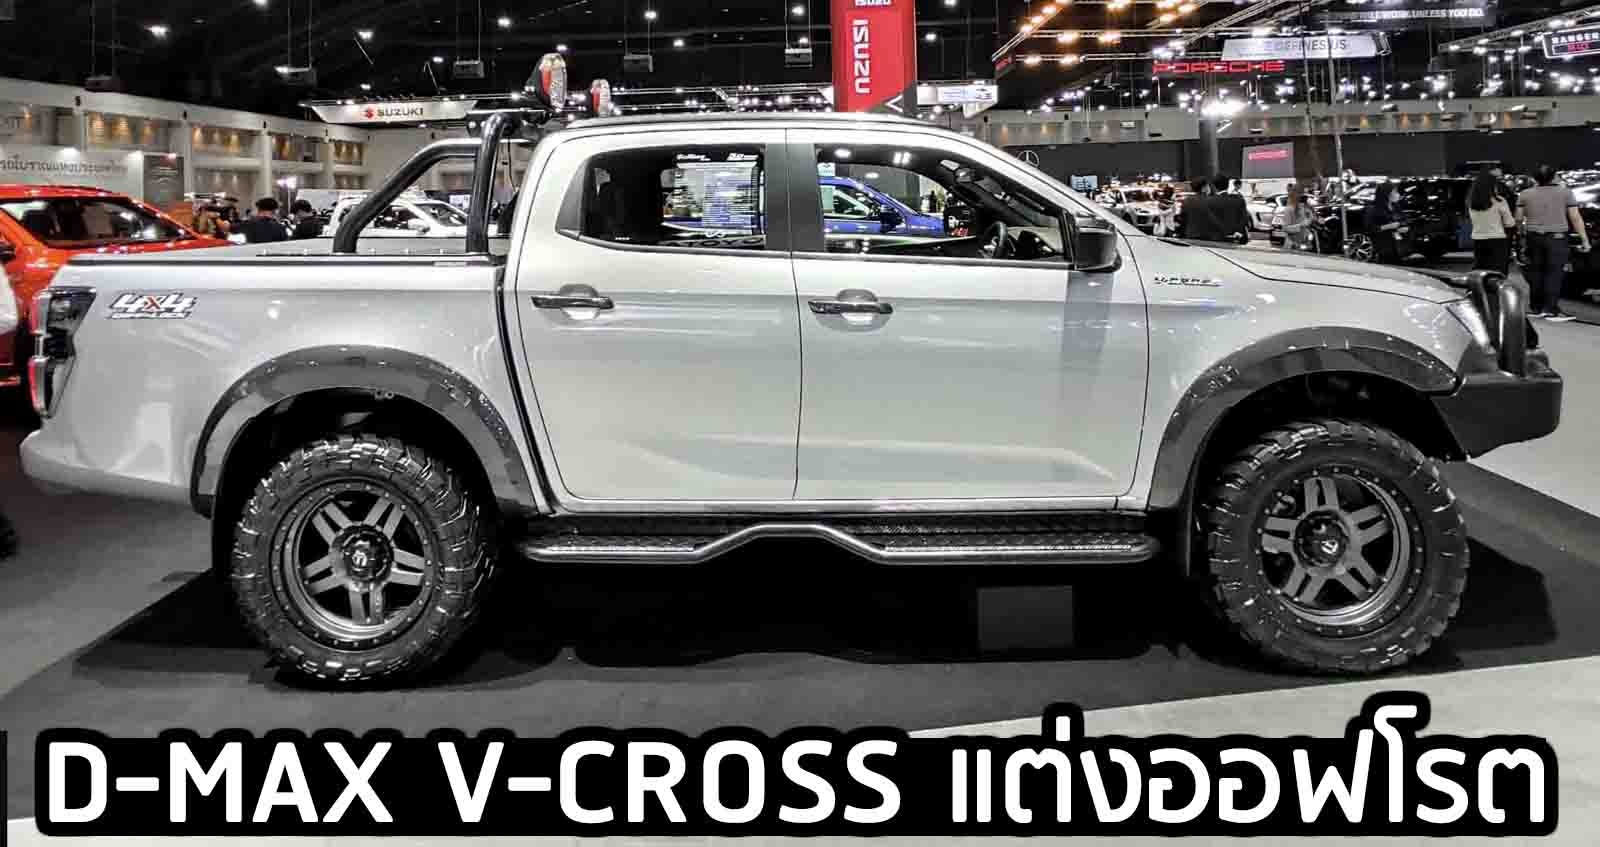 ISUZU D-MAX V-CROSS แต่งออฟโรต 436,000 บาท ท้าชน Raptor ในงาน Motor Expo 2020